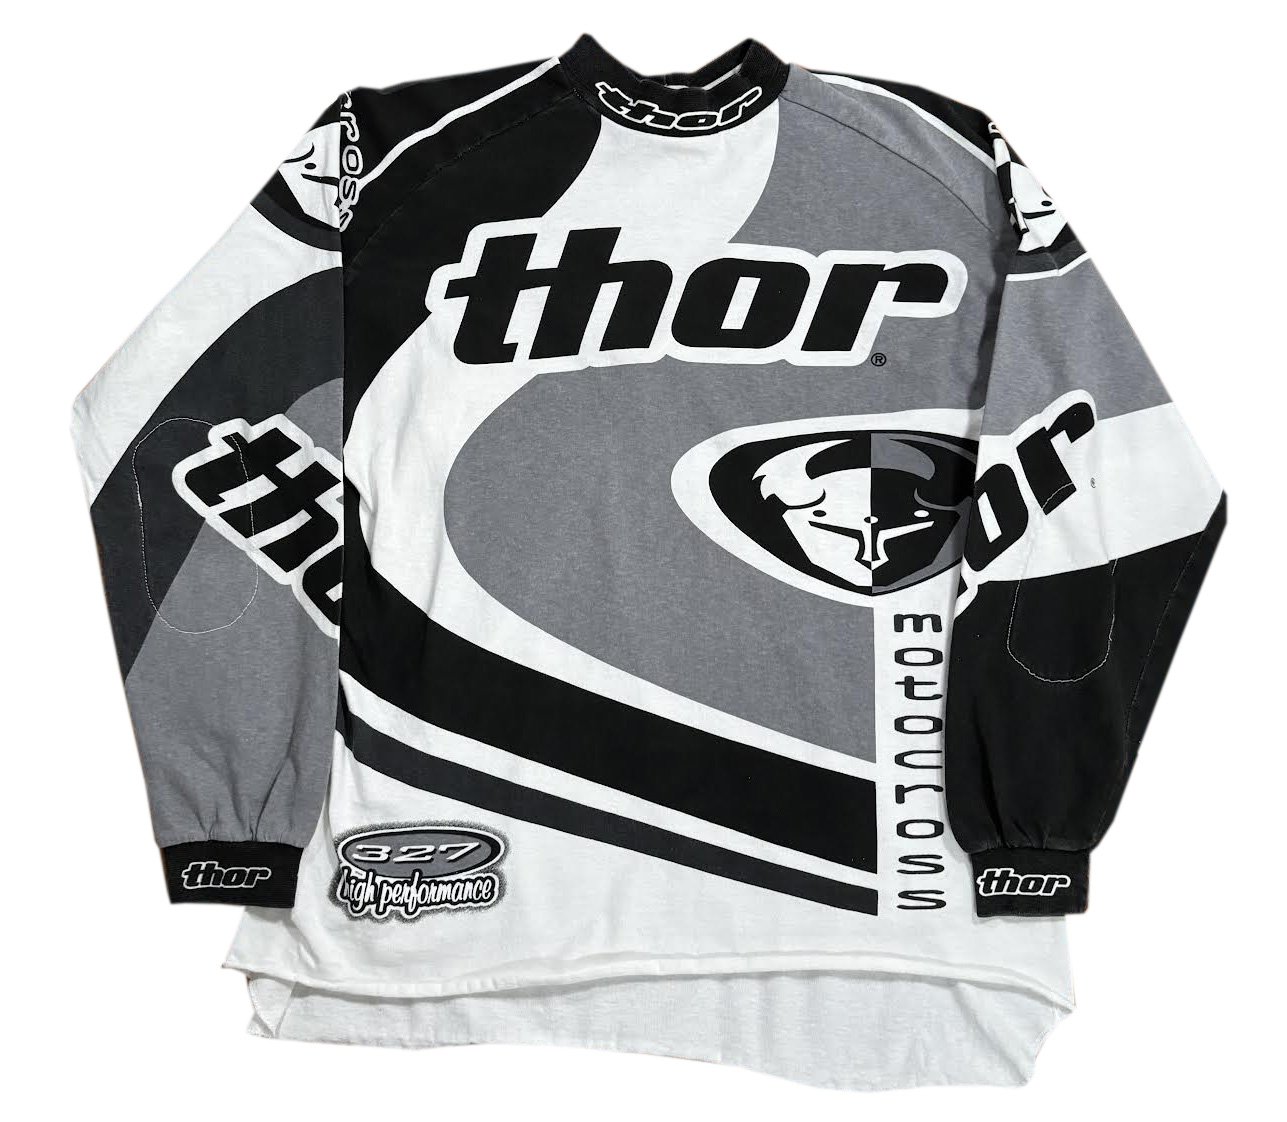 VTG Thor MX jersey .jpg